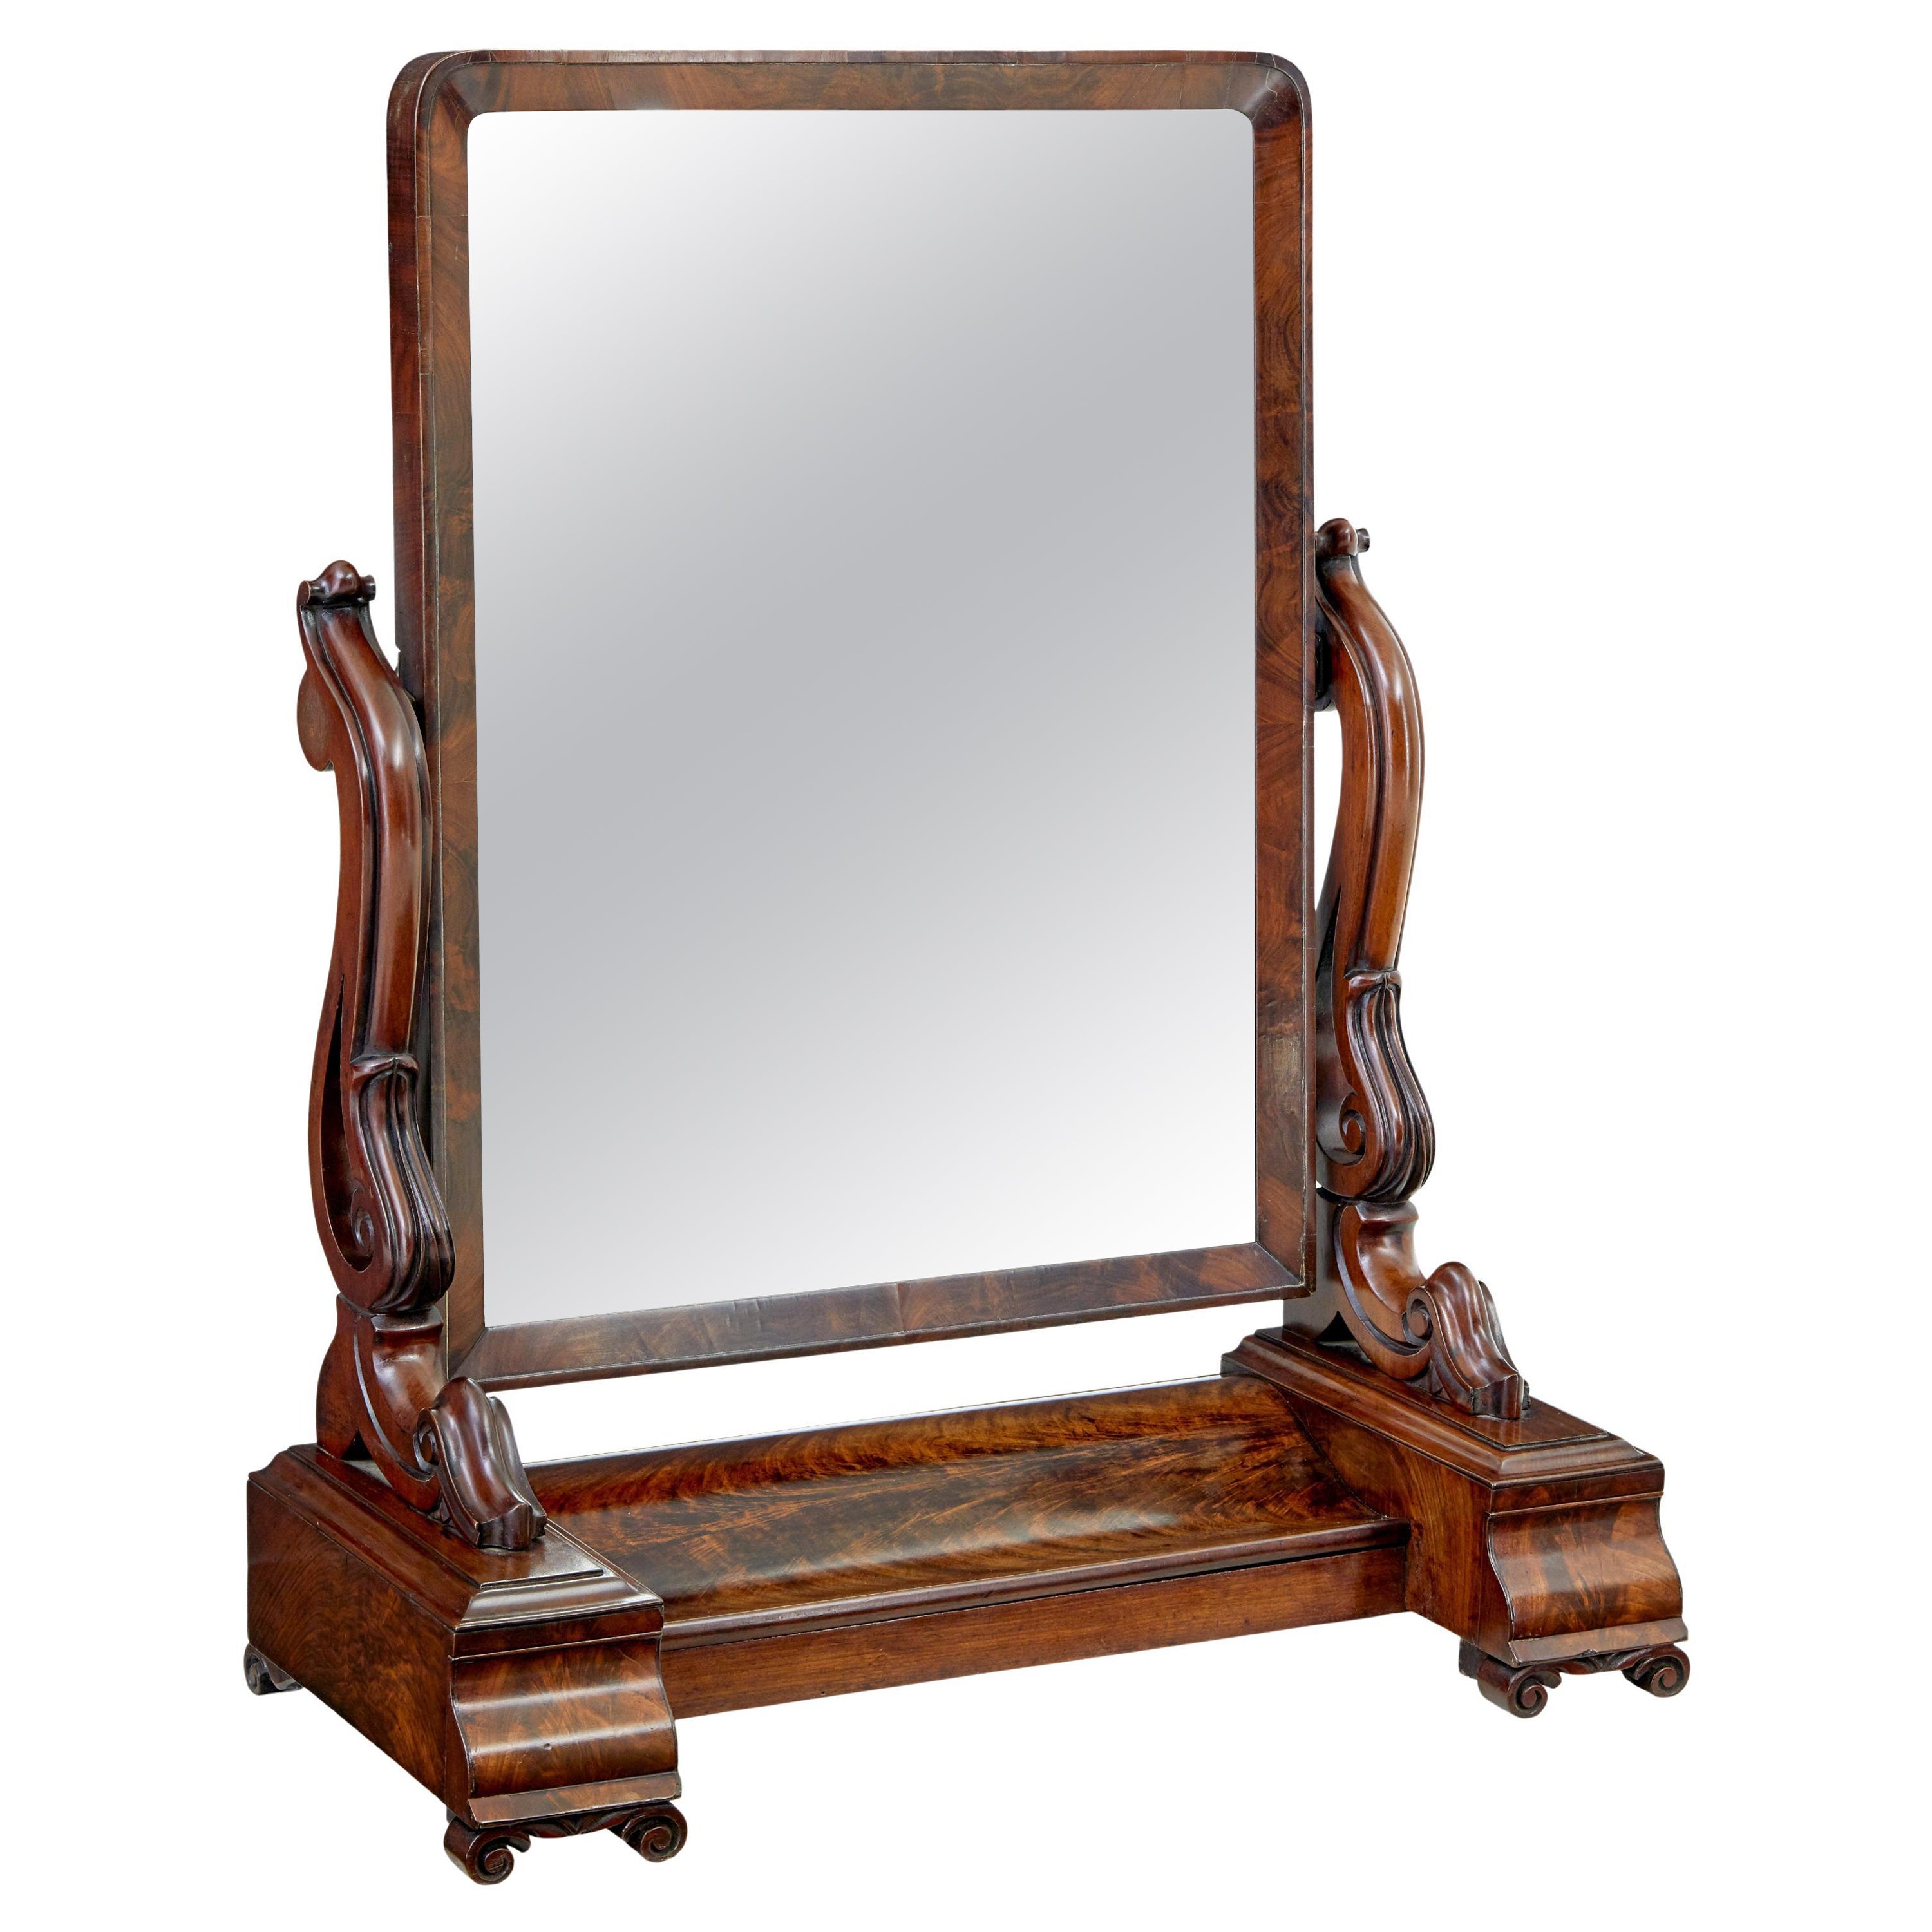 19th century early Victorian mahogany vanity mirror For Sale